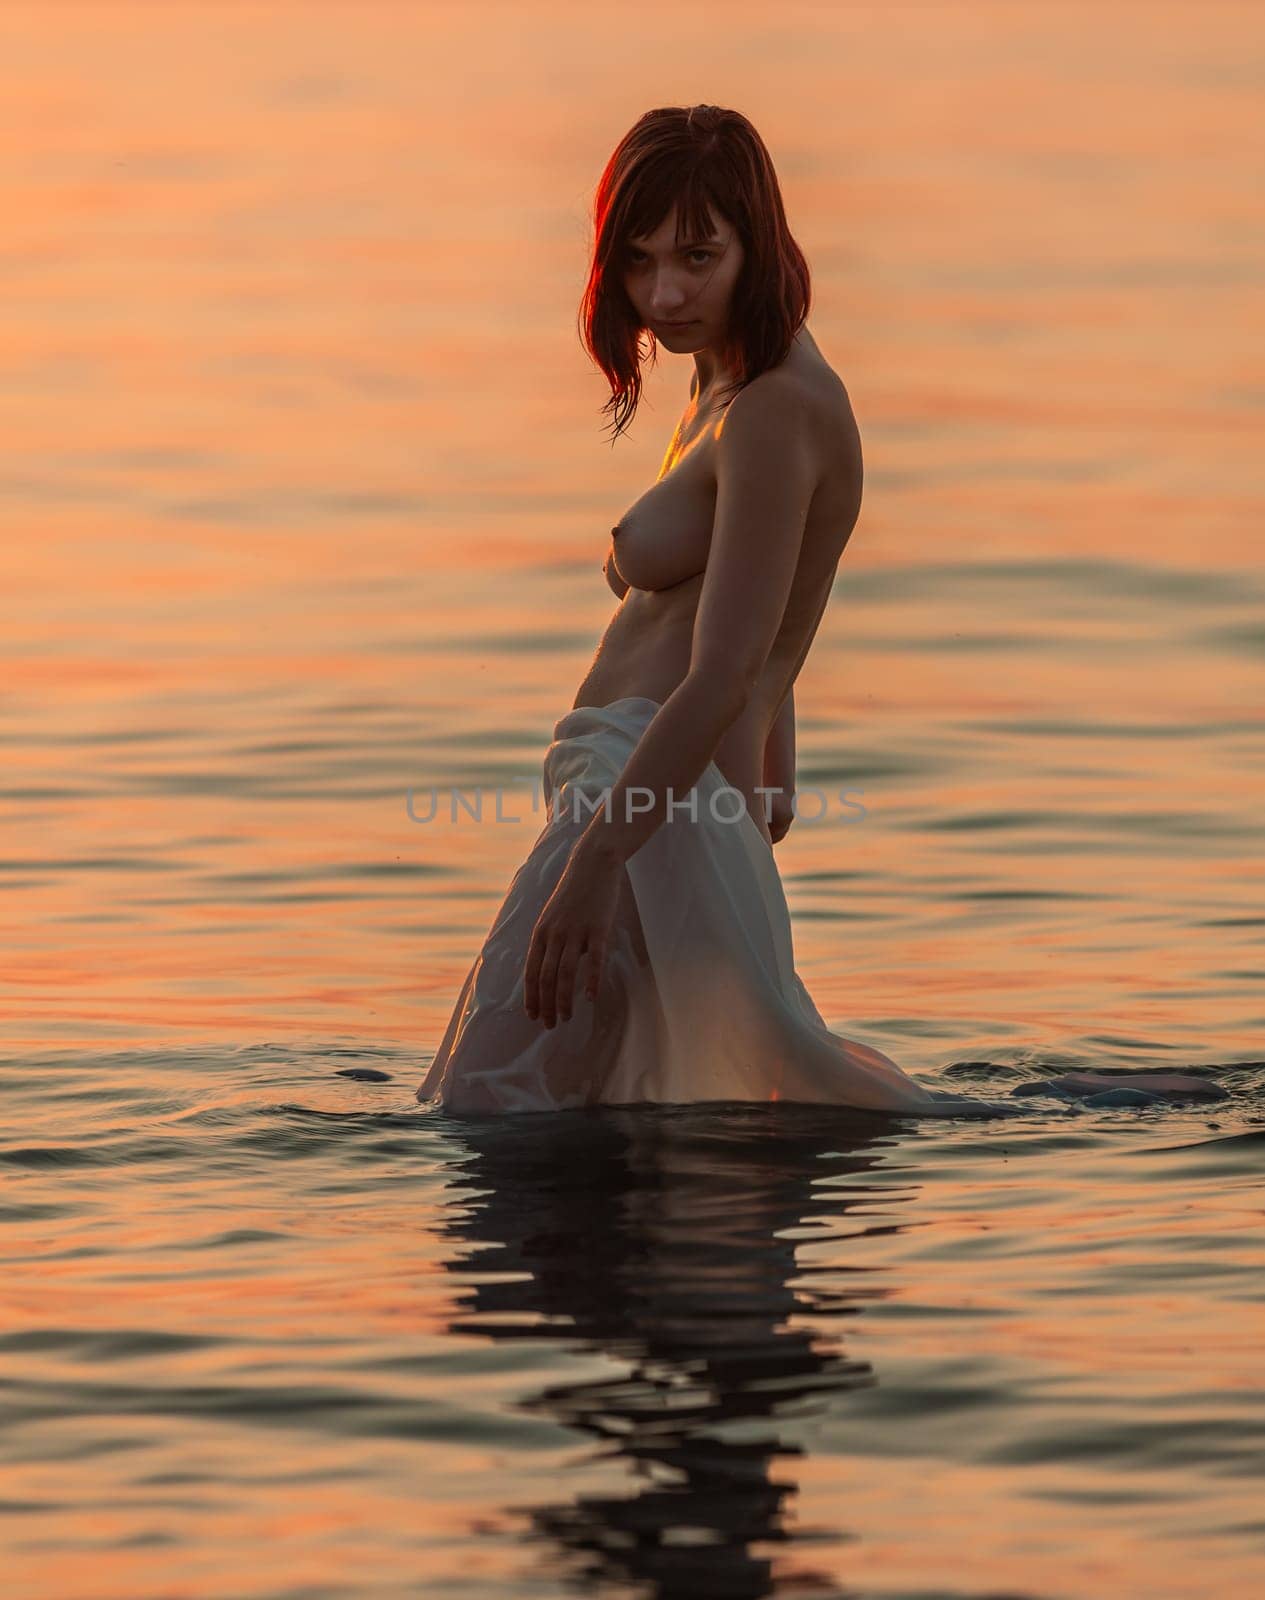 Young naked woman enjoying nature on the seashore by palinchak